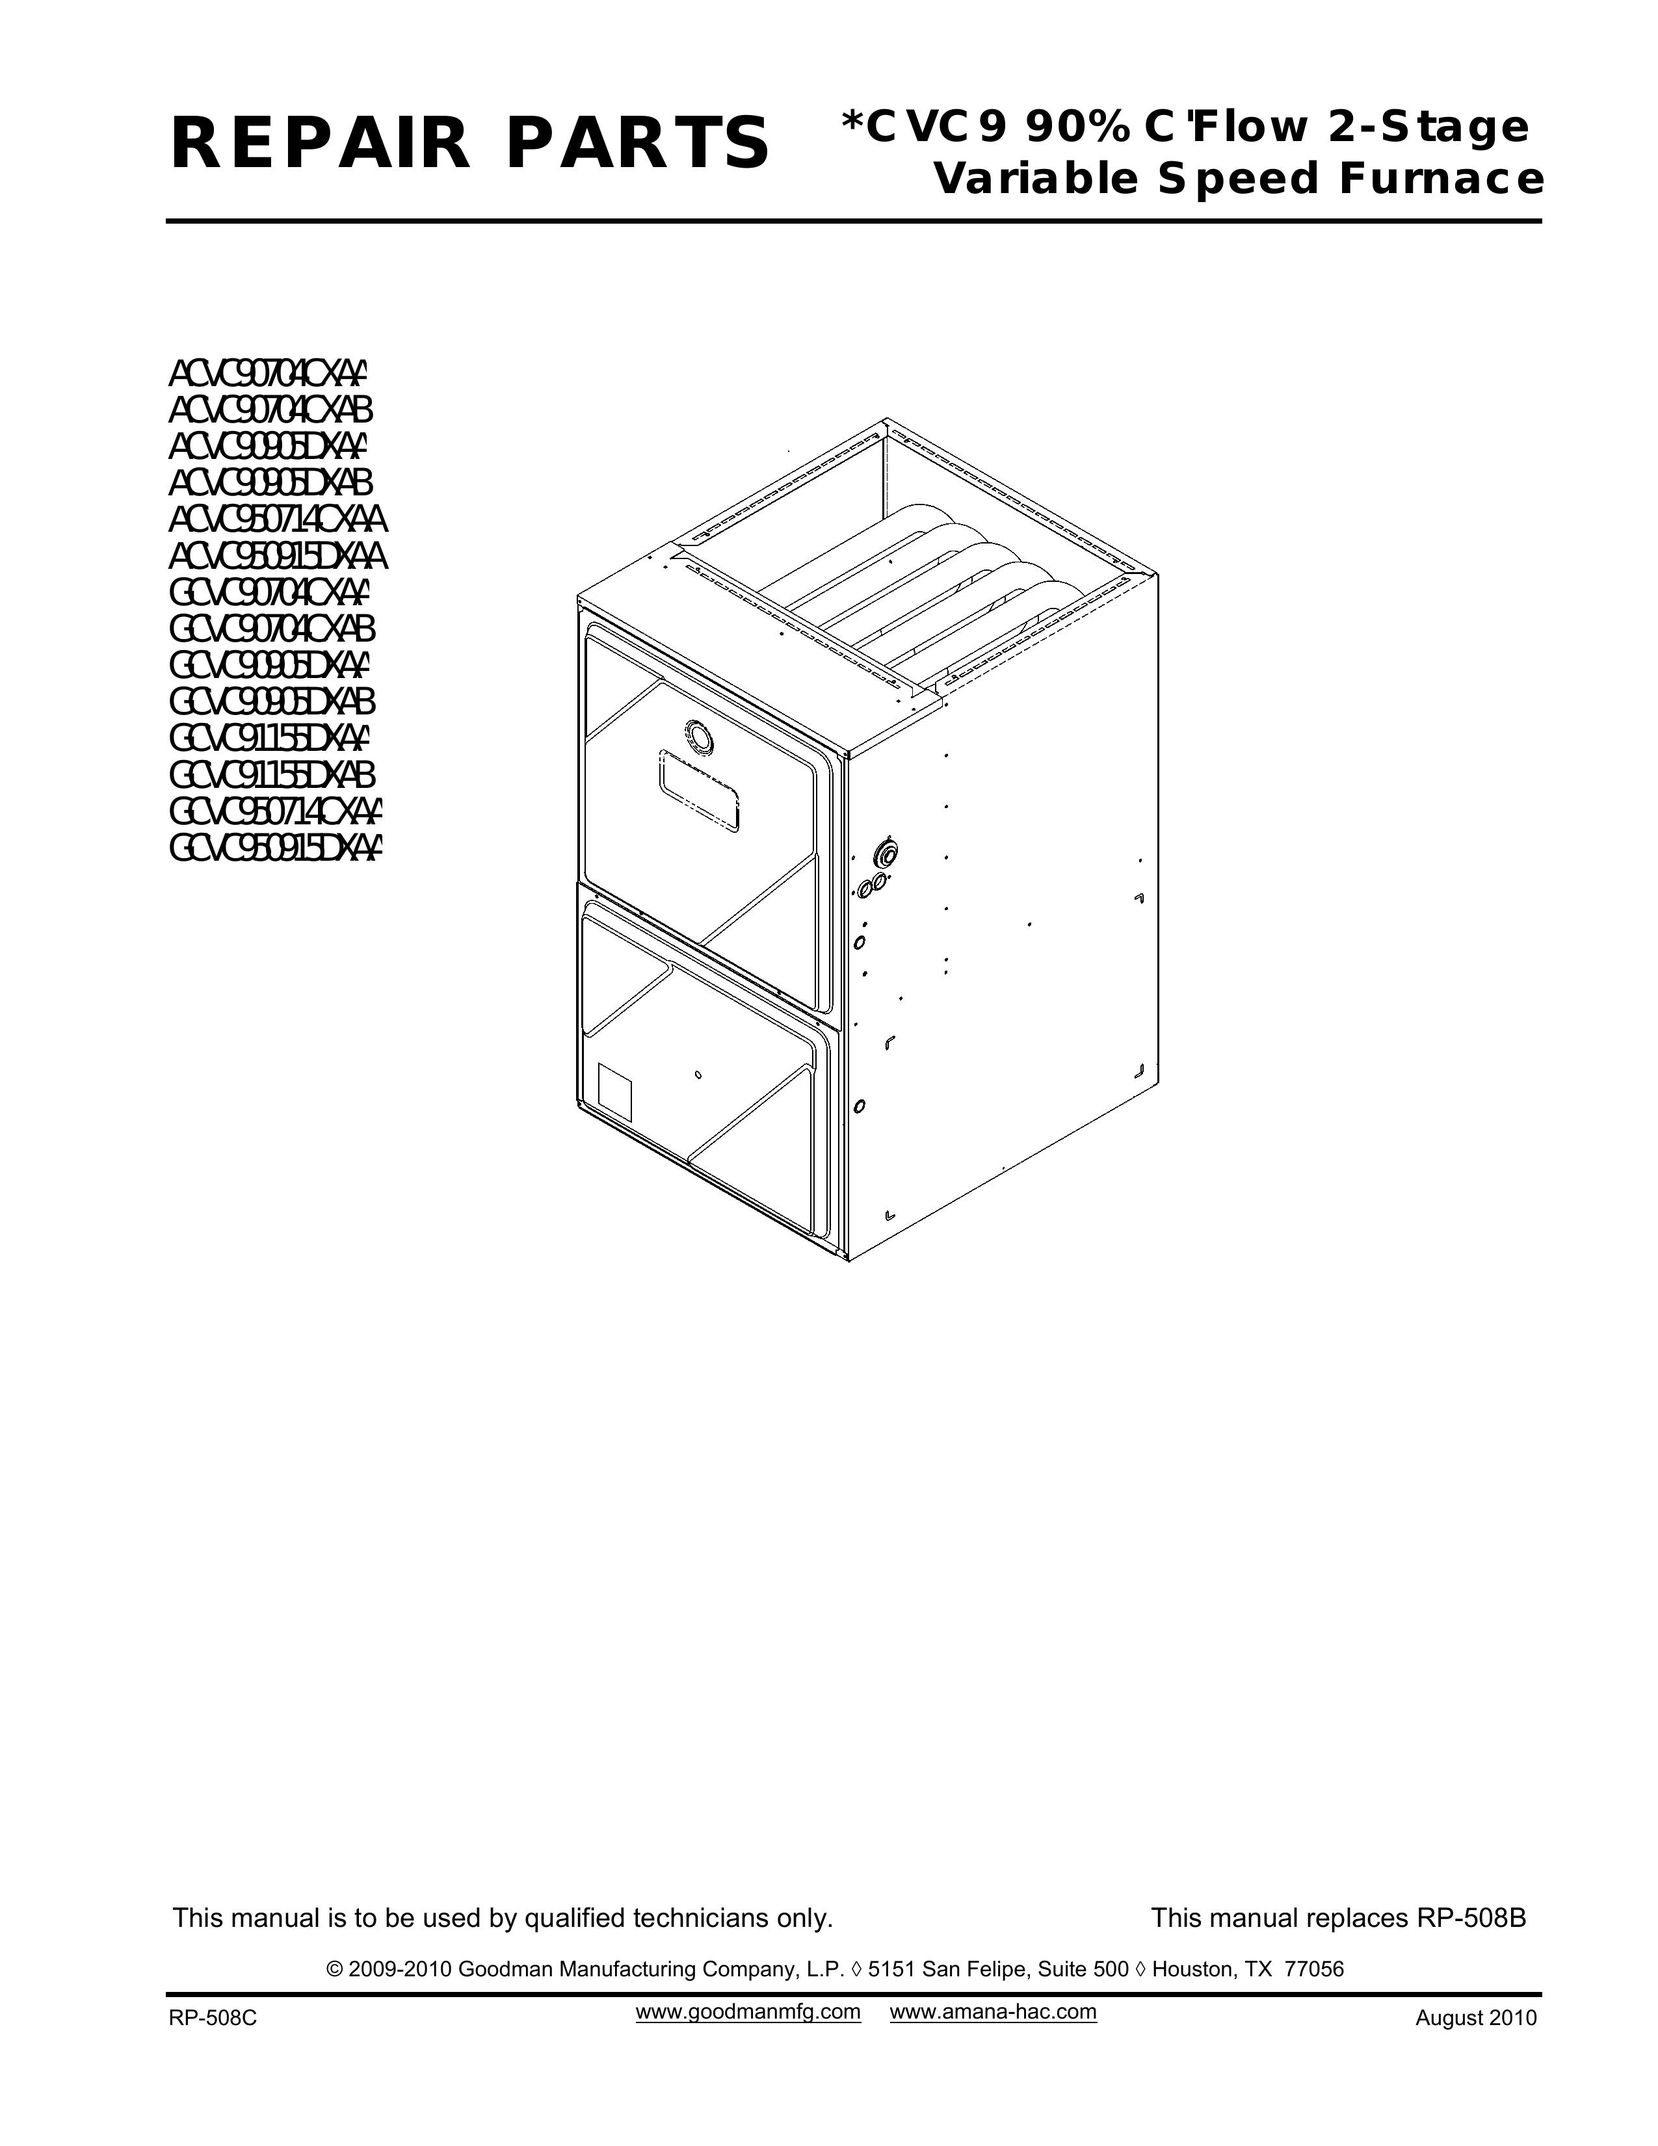 Goodman Mfg ACVC90704CXAA Furnace User Manual